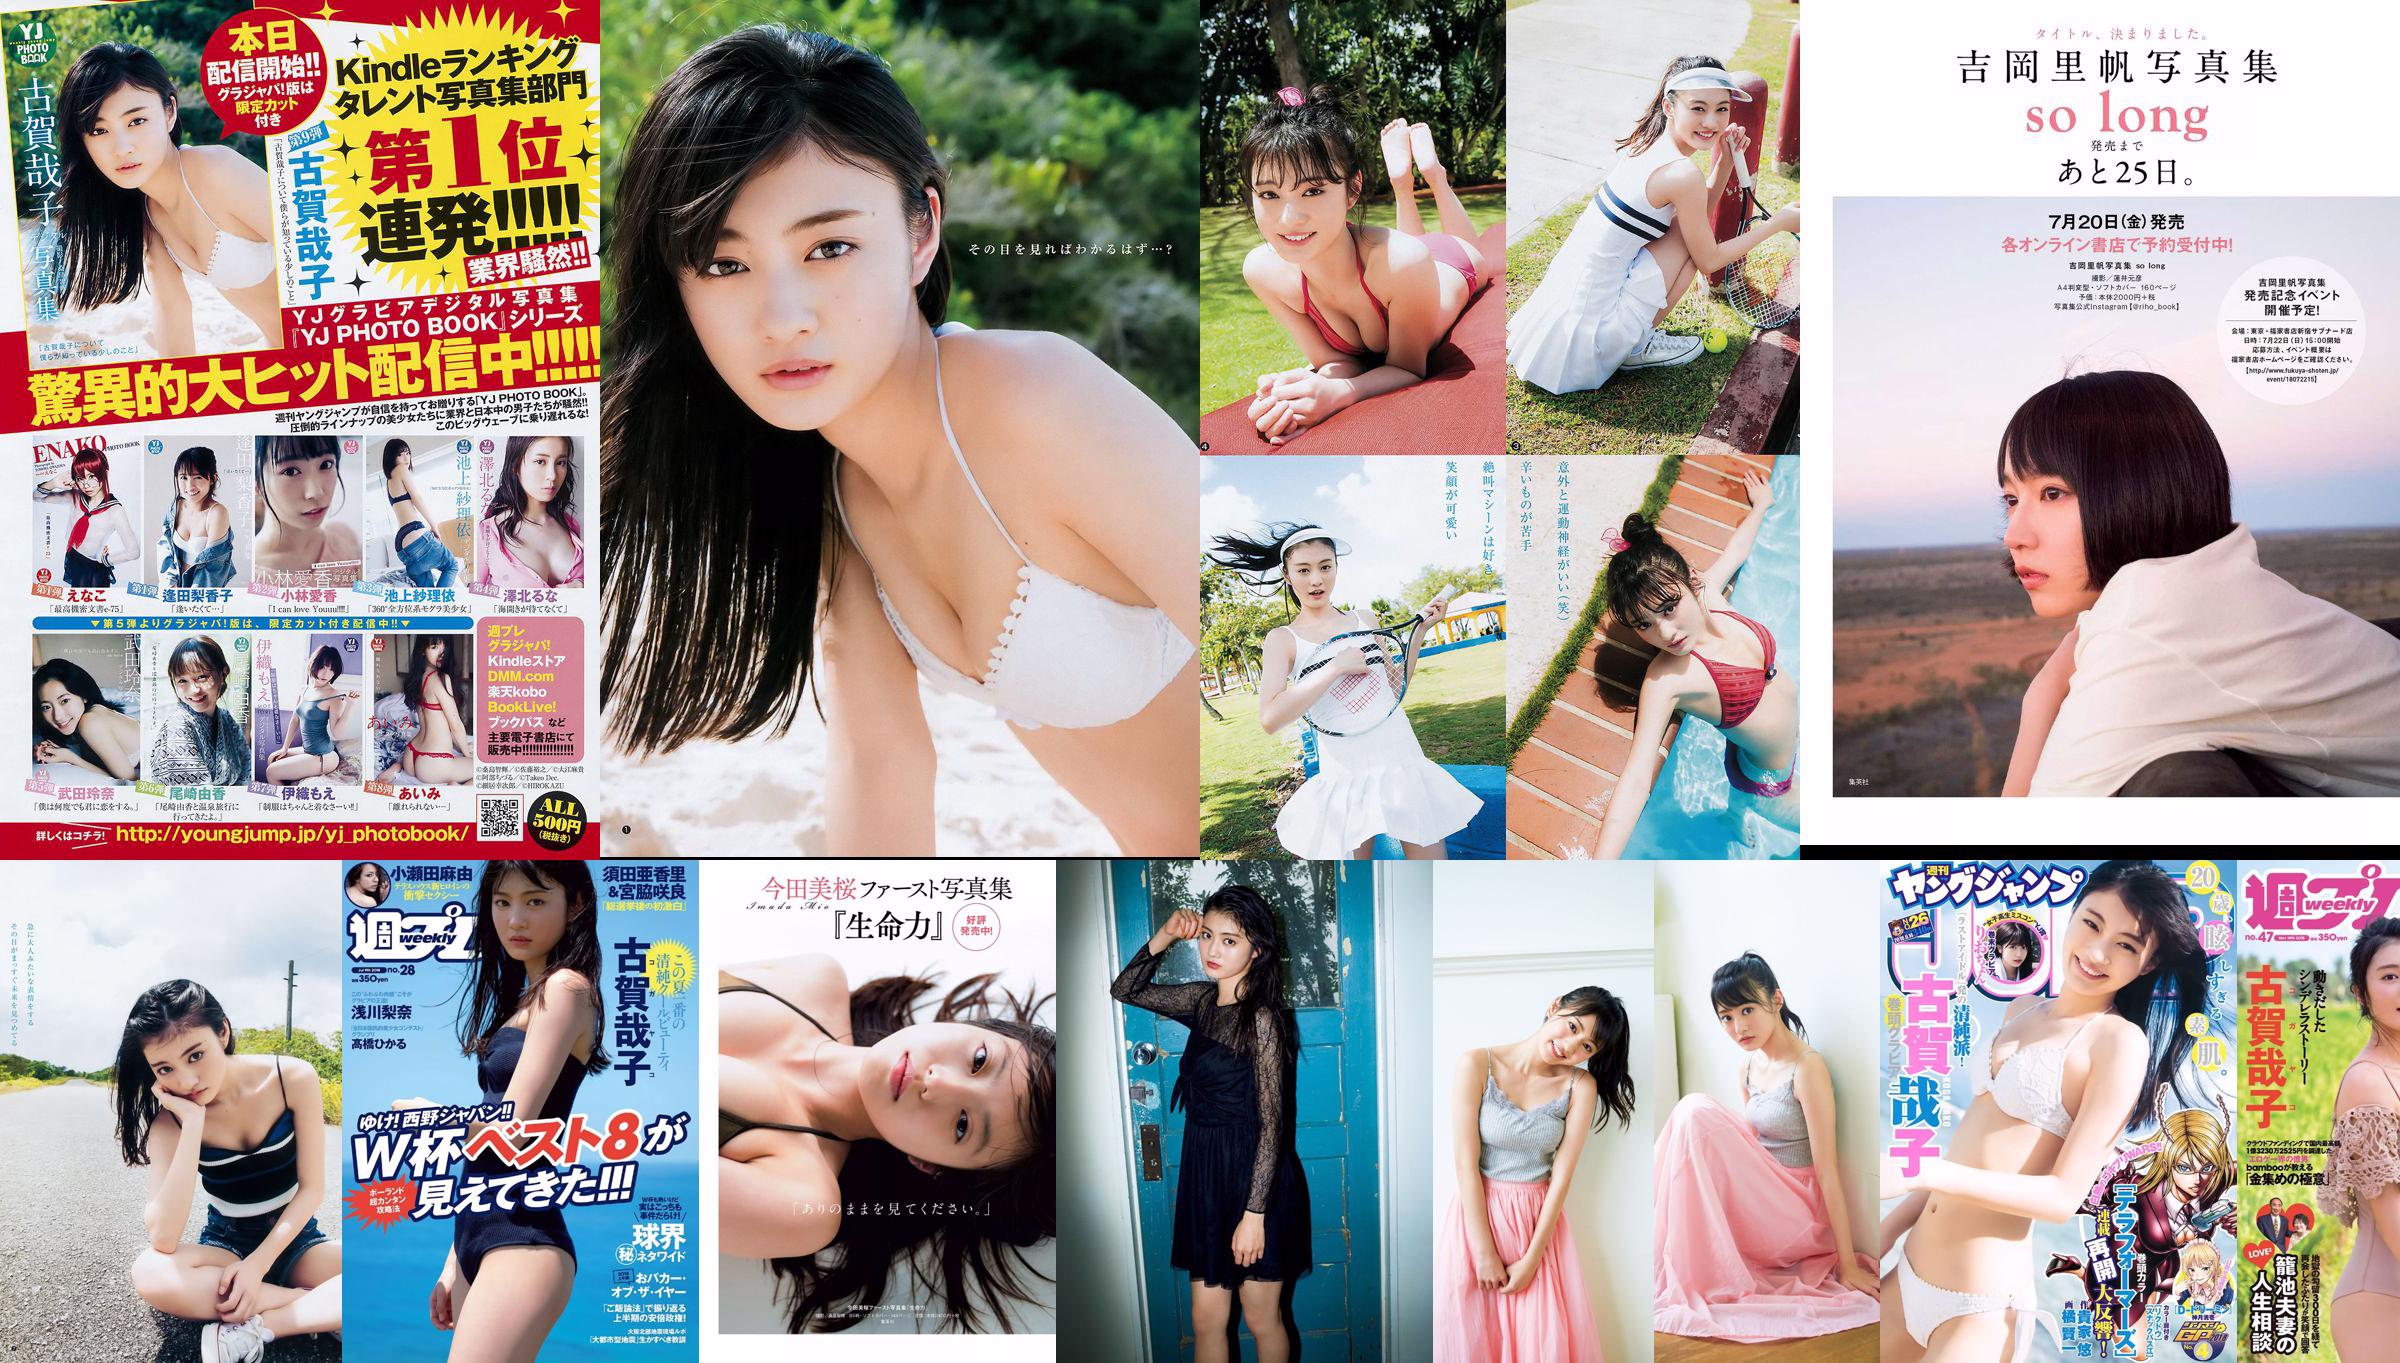 Yoshiko Koga りおちょん [Weekly Young Jump] No. 26 Photo Magazine in 2018 No.43ee7d Page 1